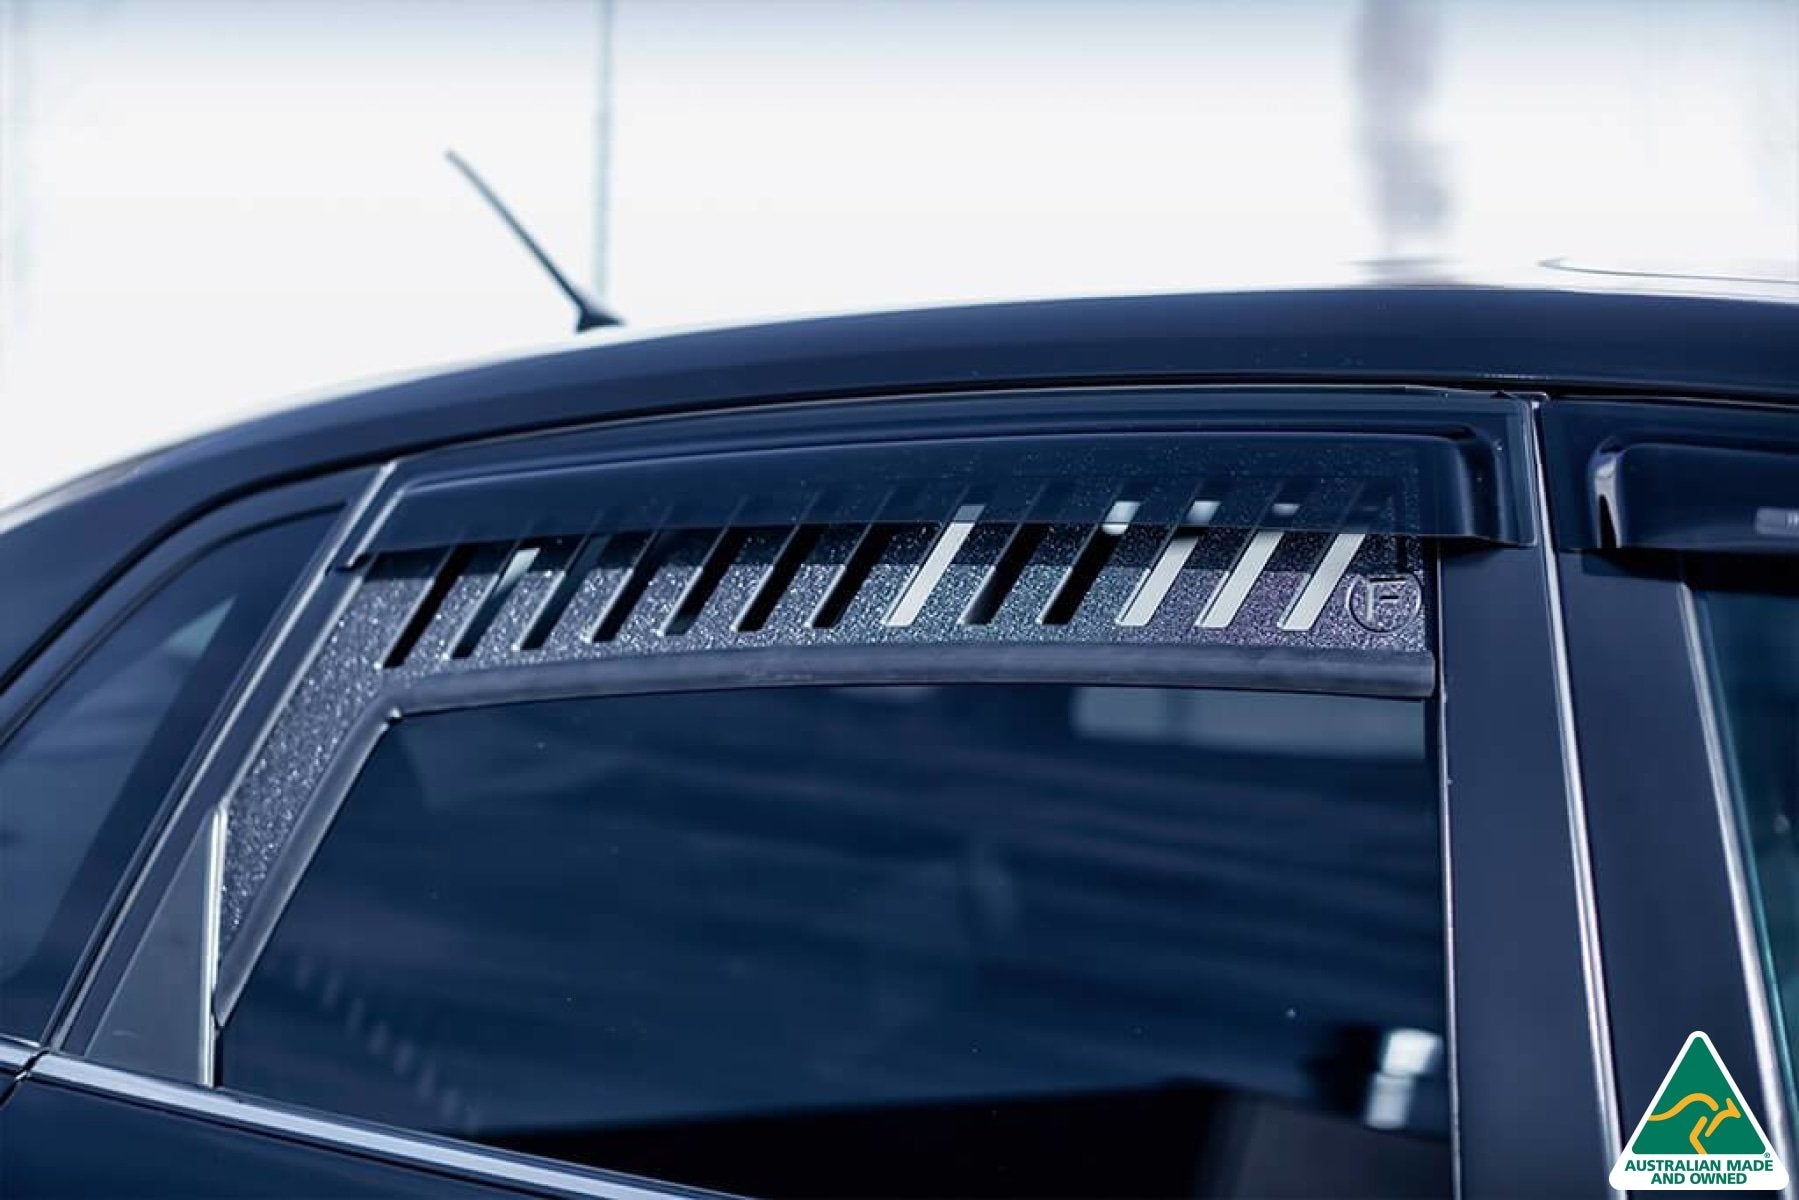 Impreza WRX / STI G3 Hatch & Sedan (FL) Window Vents (Pair) - MODE Auto Concepts